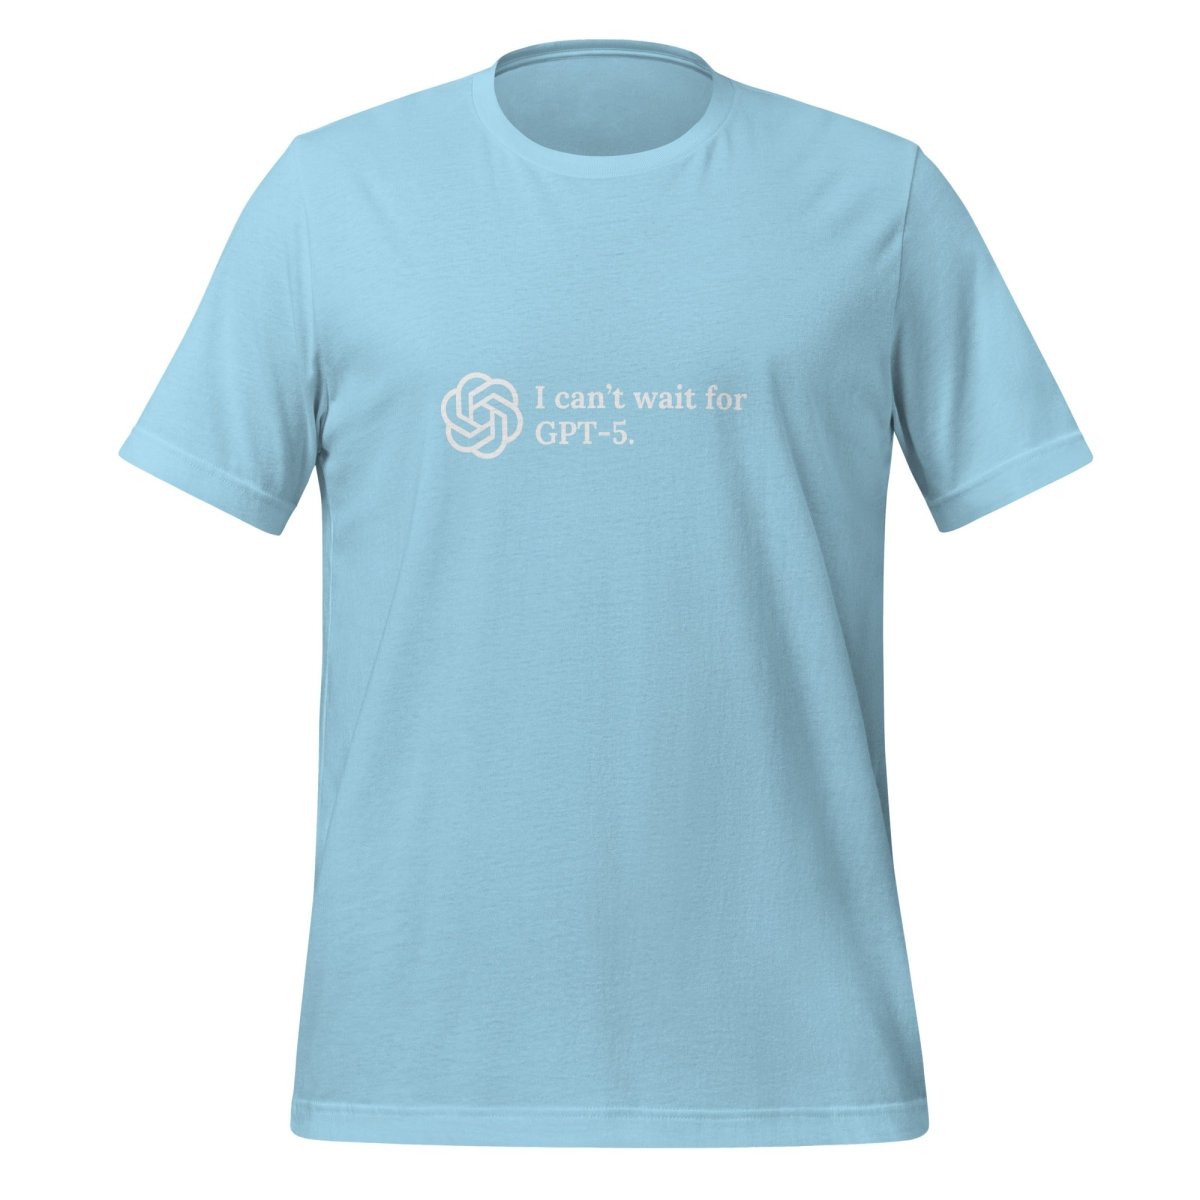 I can't wait for GPT - 5. T - Shirt (unisex) - Ocean Blue - AI Store